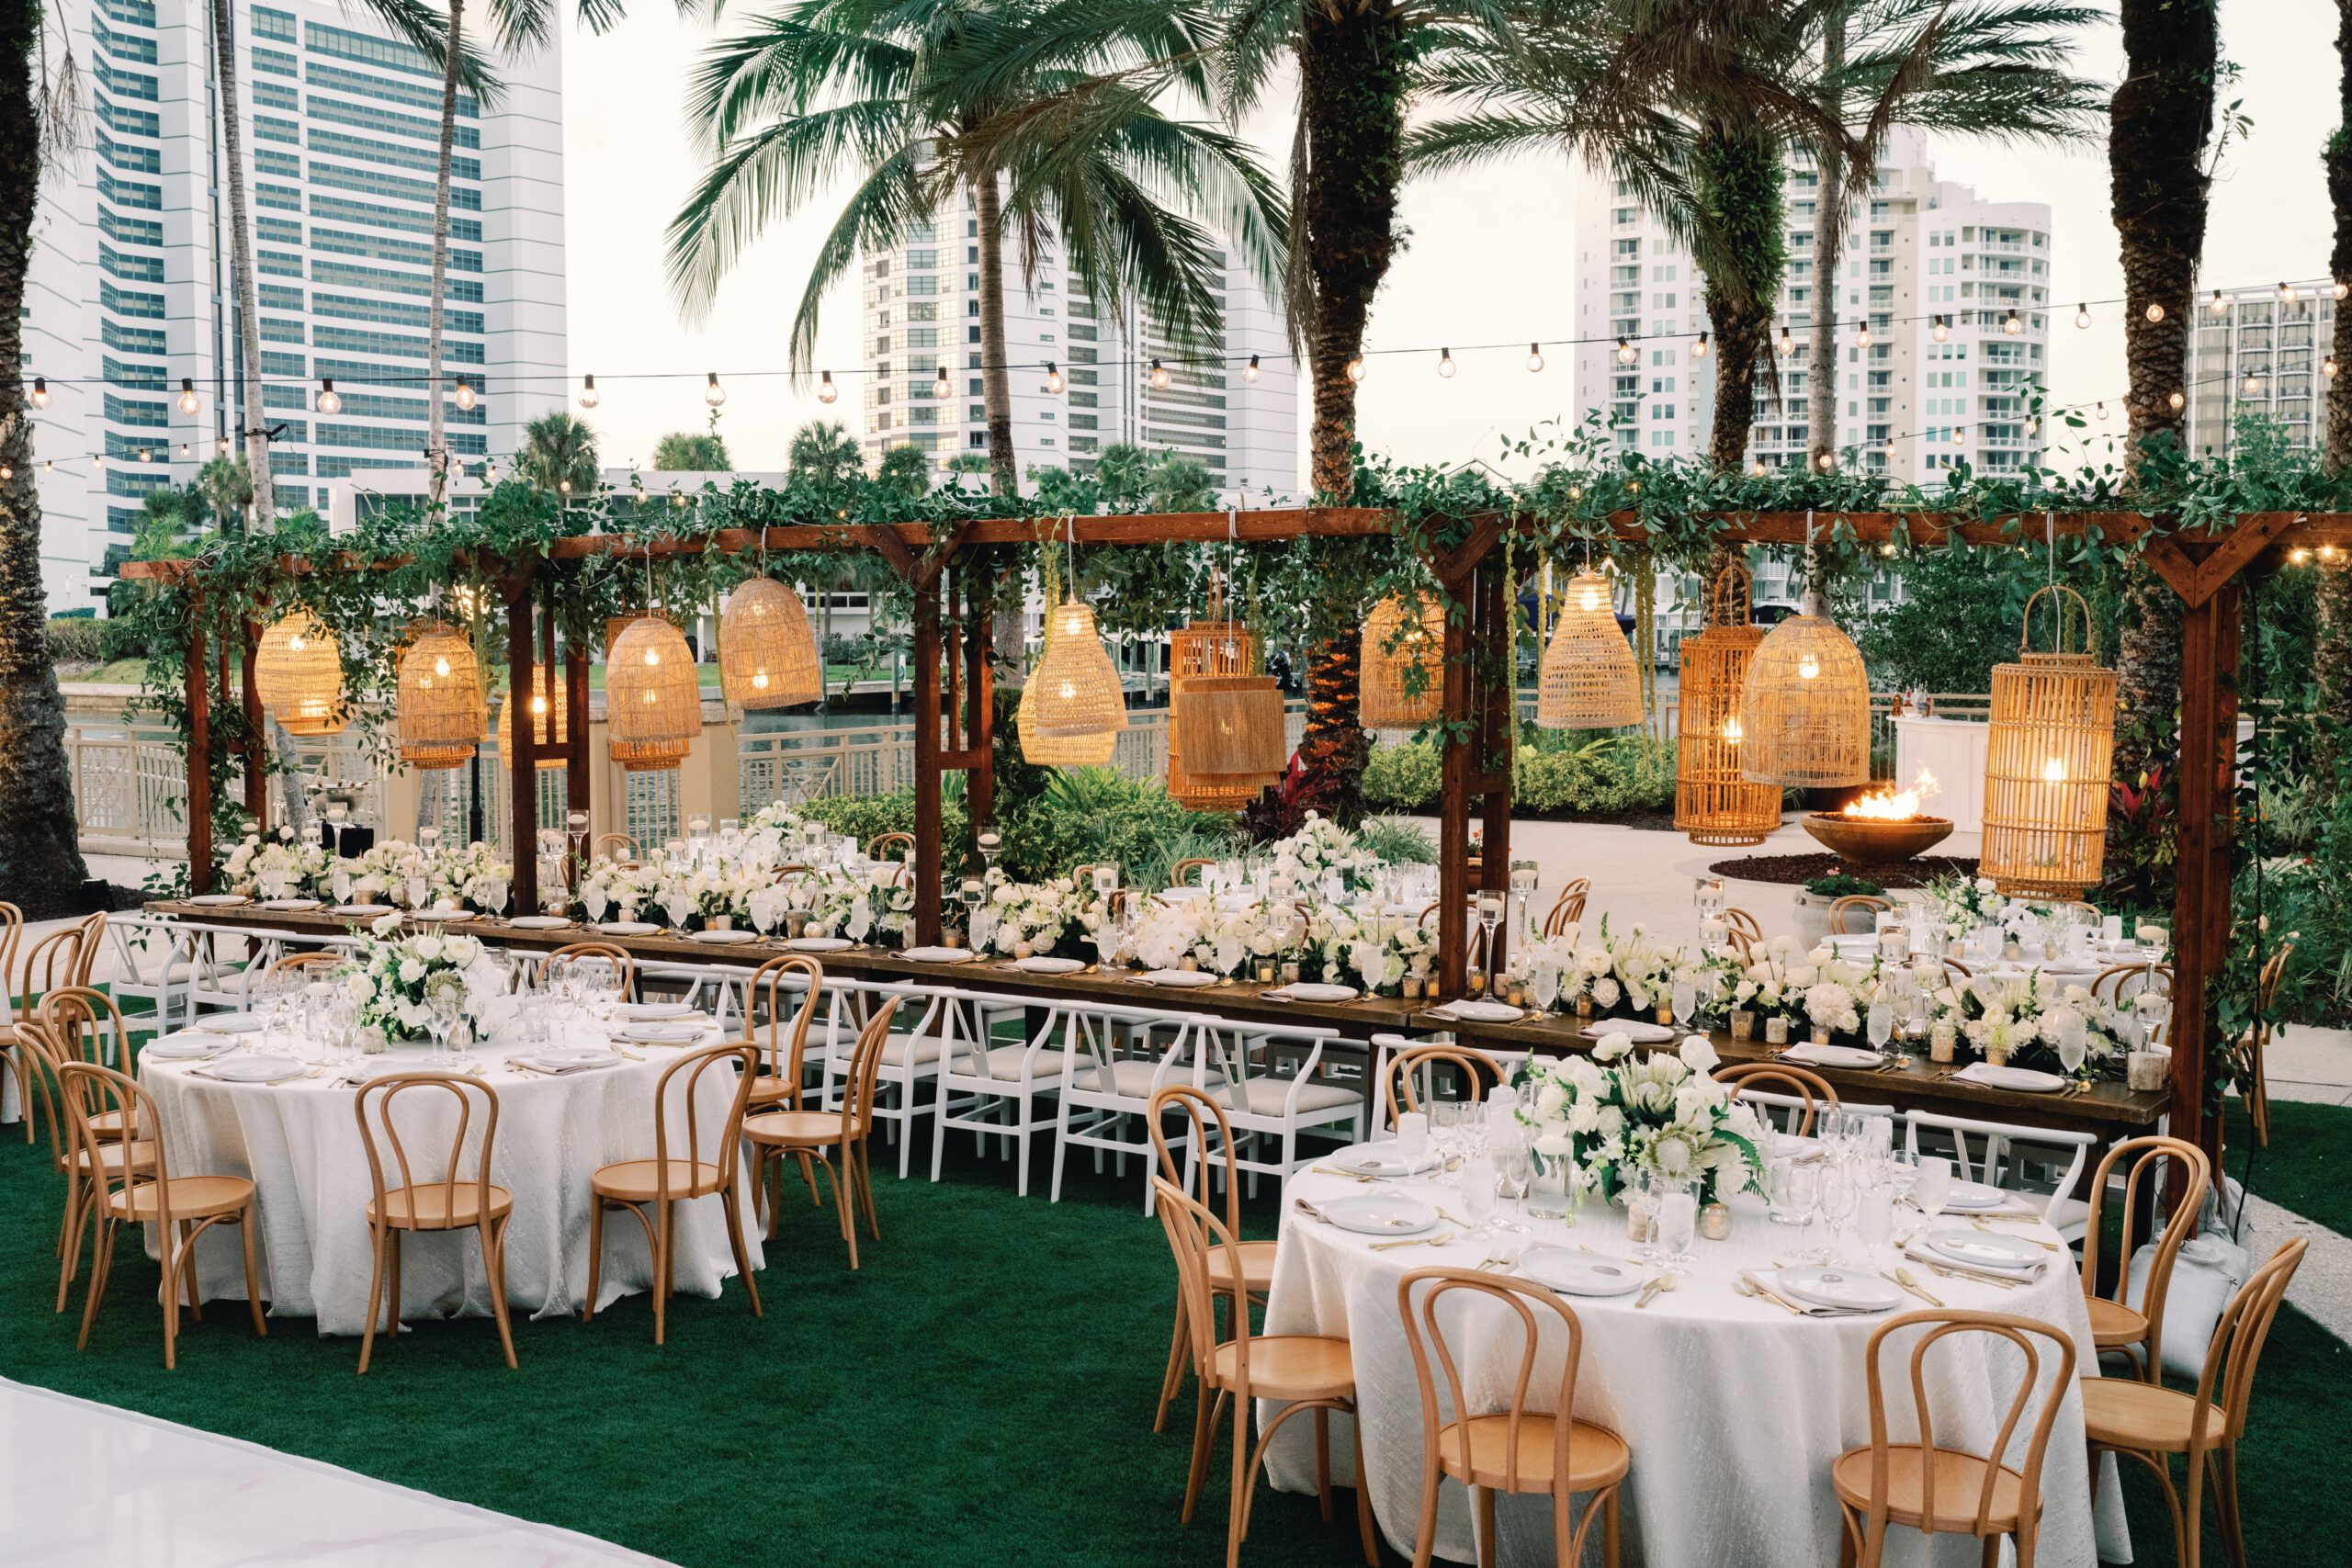 Taylor and Chris Wed Along Florida Gulf Coast at The Ritz Carlton Sarasota Reception Views